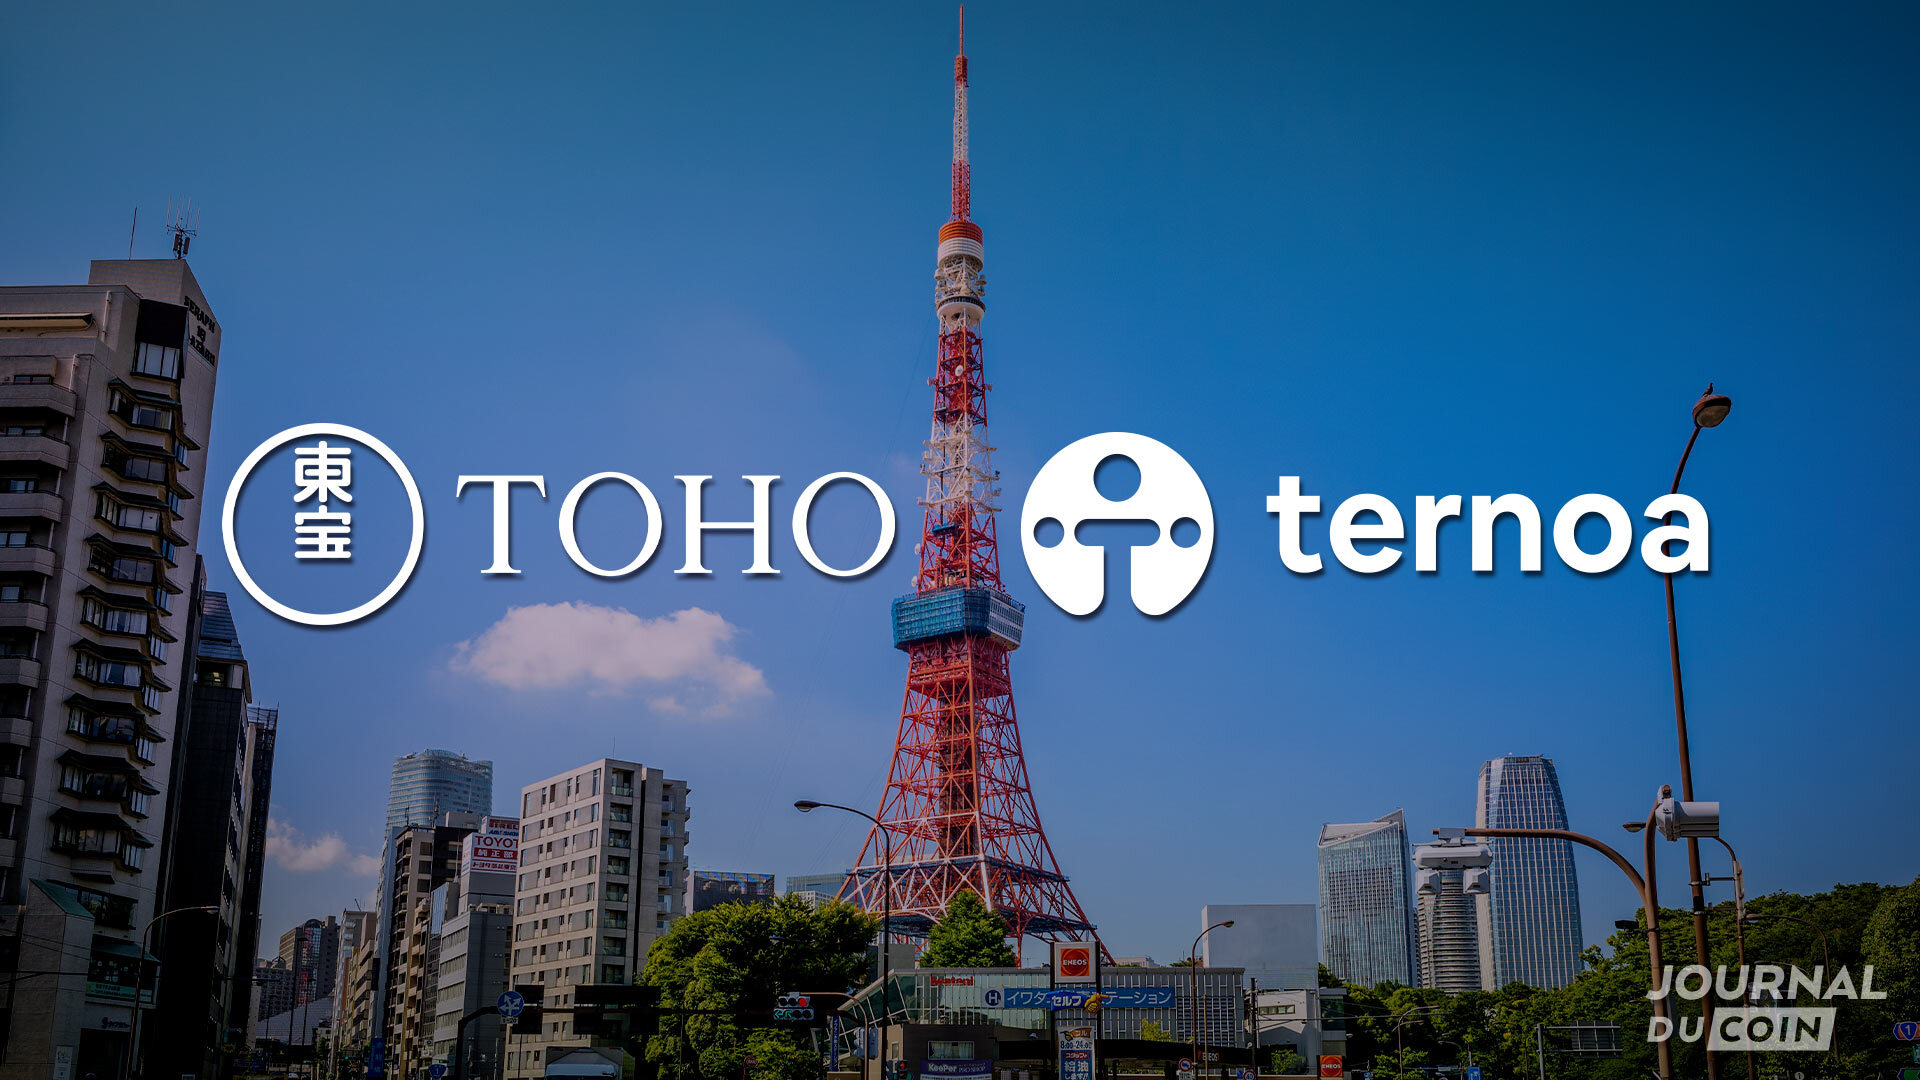 Japanese entertainment giant Toho joins web3 with Ternoa